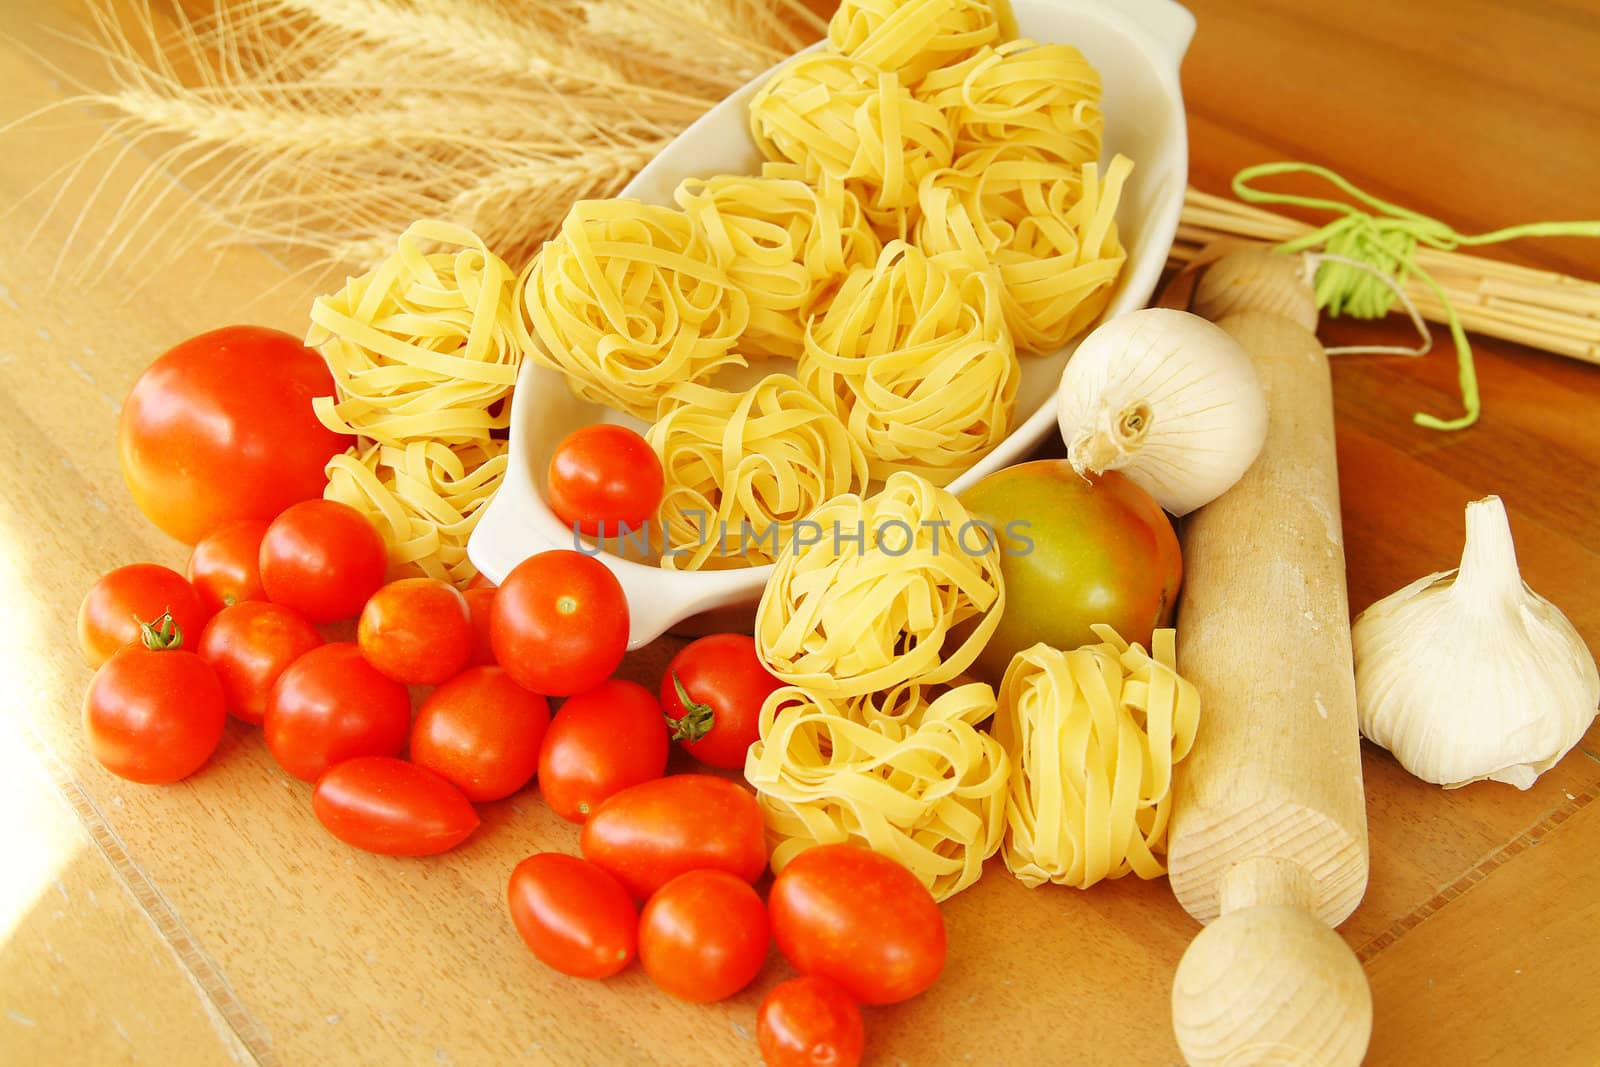 Pasta, garlic and tomatoes